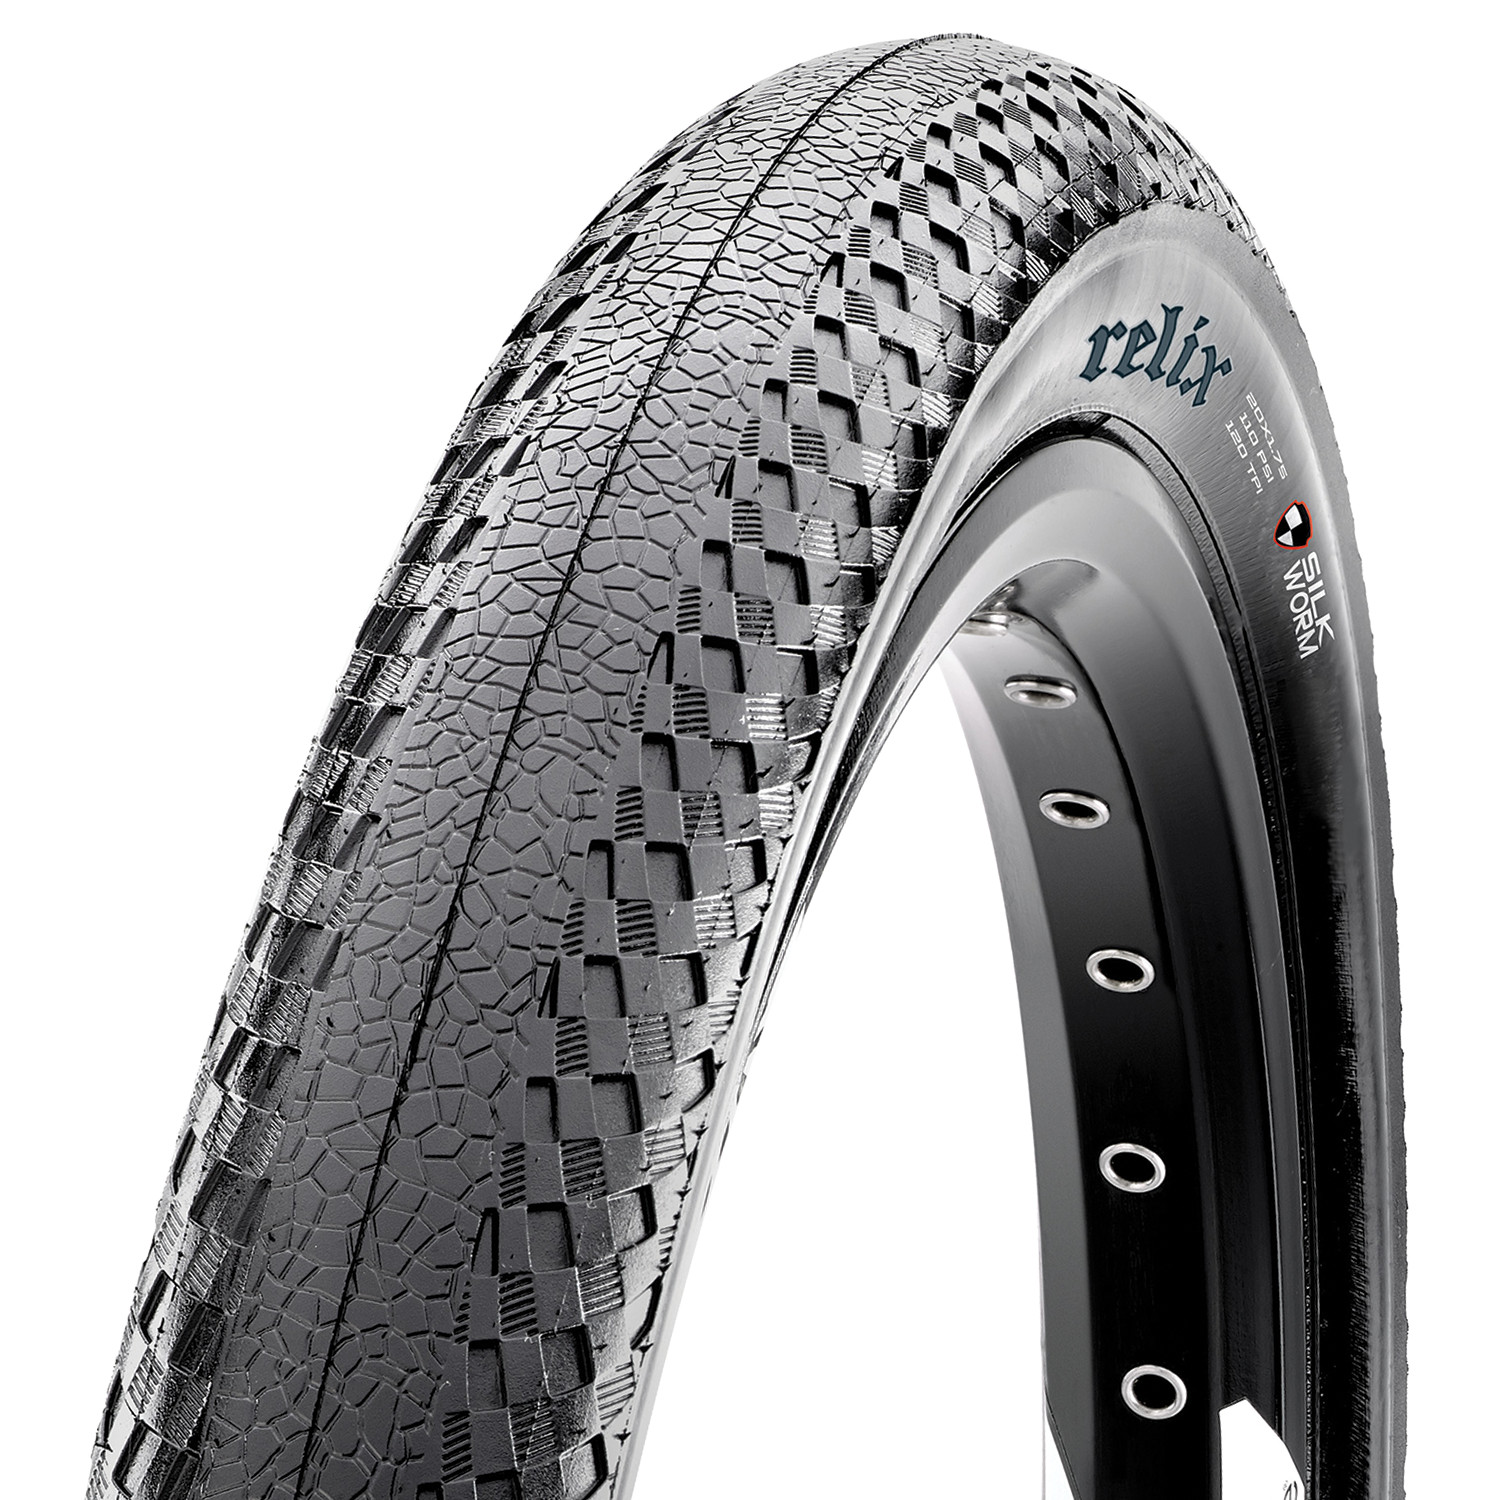 Productfoto van Maxxis Relix Folding Tire - SilkWorm - 20x1.75 Inch